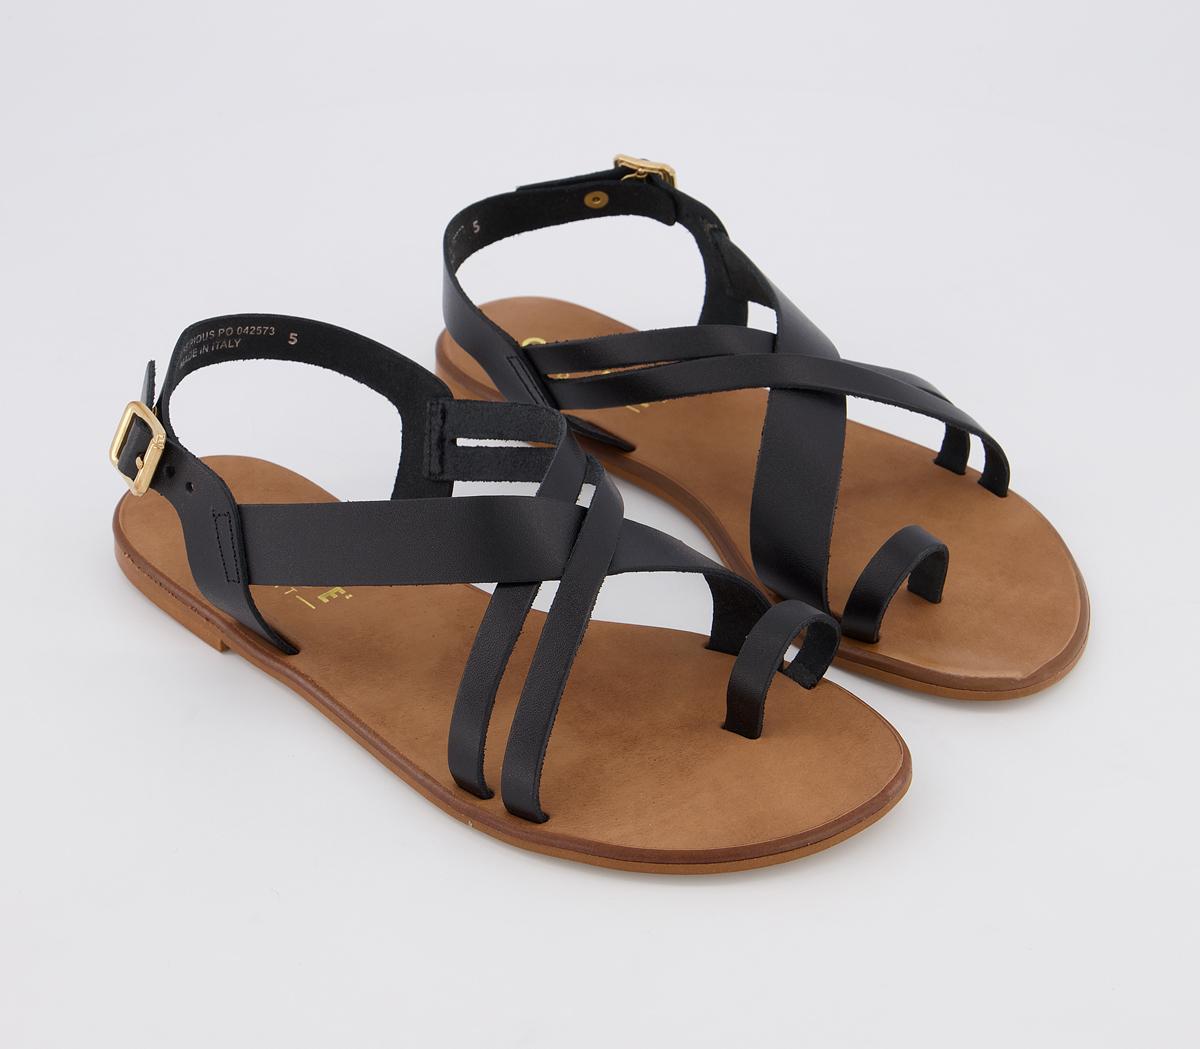 Office Serious Tan Toe Loop Sandals Black Leather - Women’s Sandals